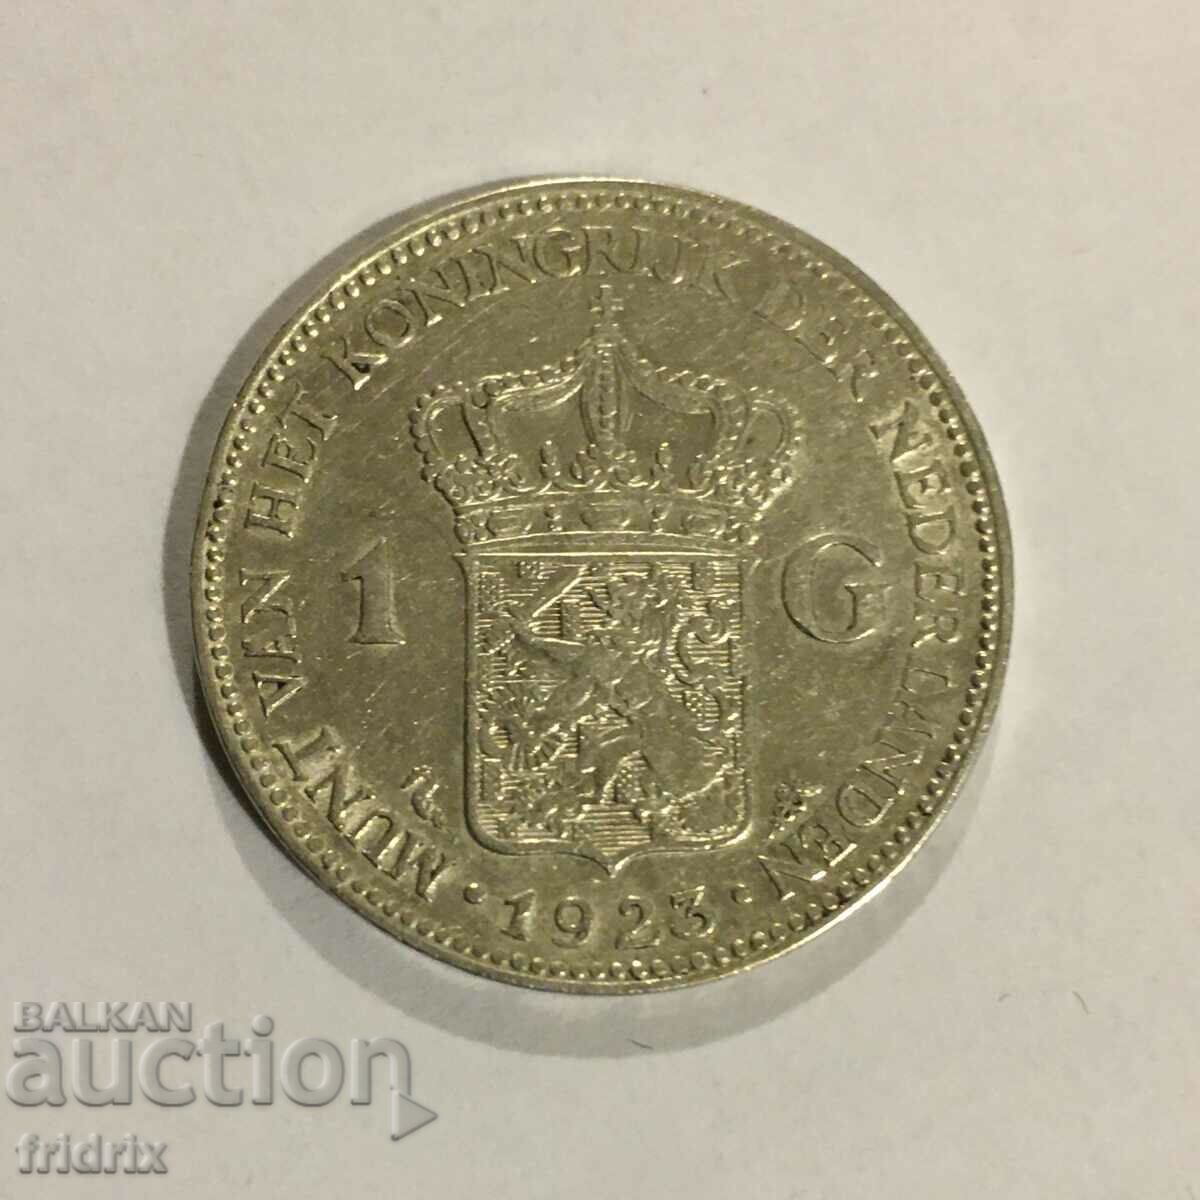 Нидерландия 1 гулден 1923 / Netherlands 1 gulden 1923